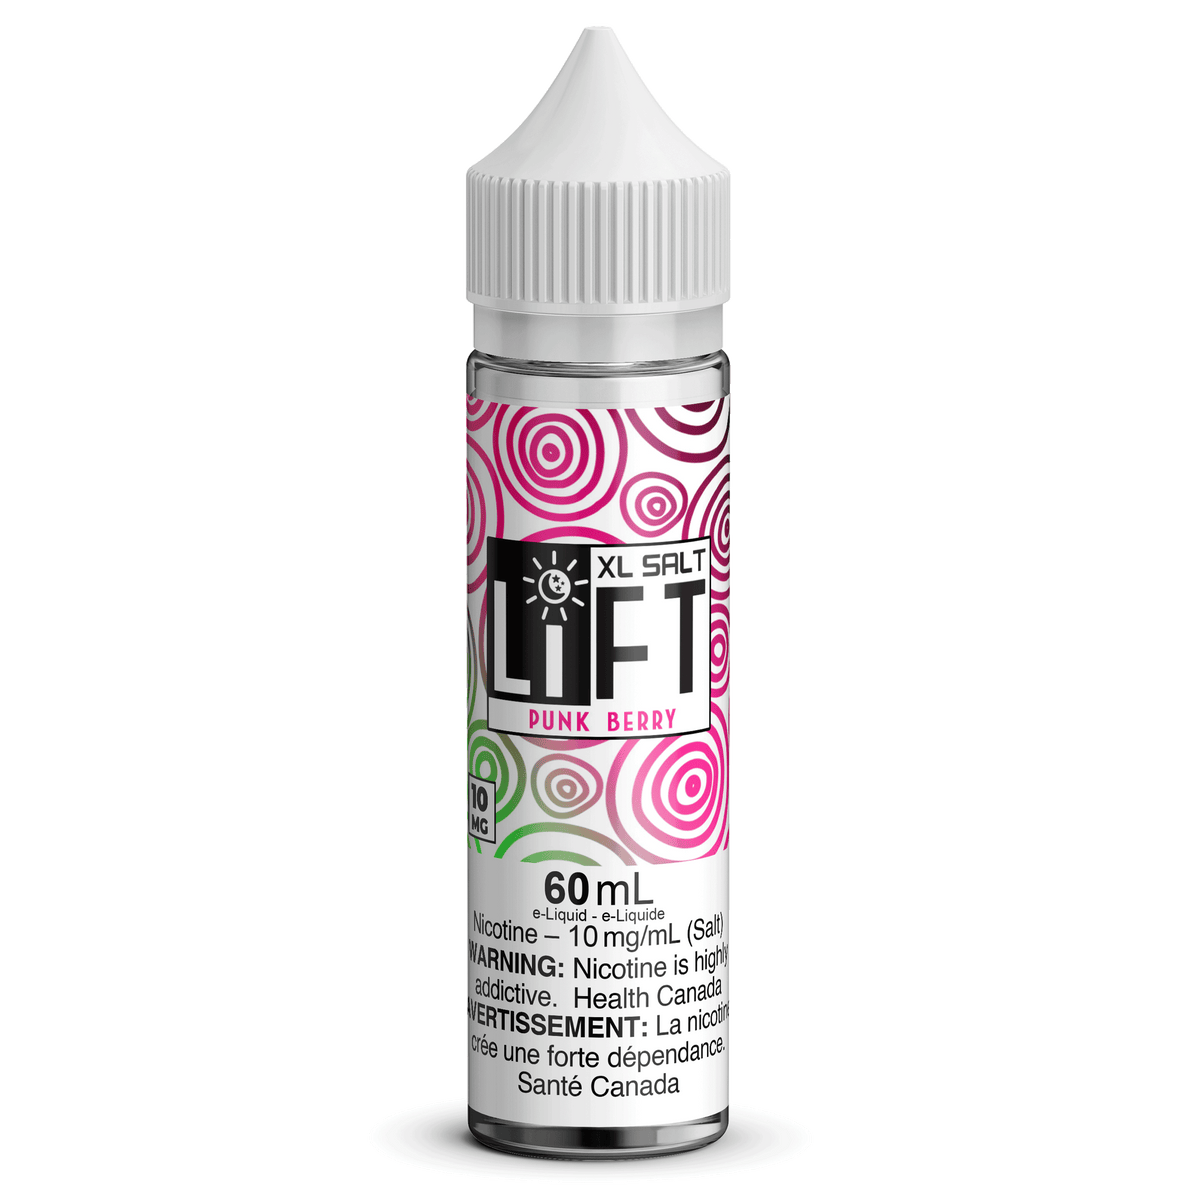 LIFT XL SALT - Punk Berry available on Canada online vape shop